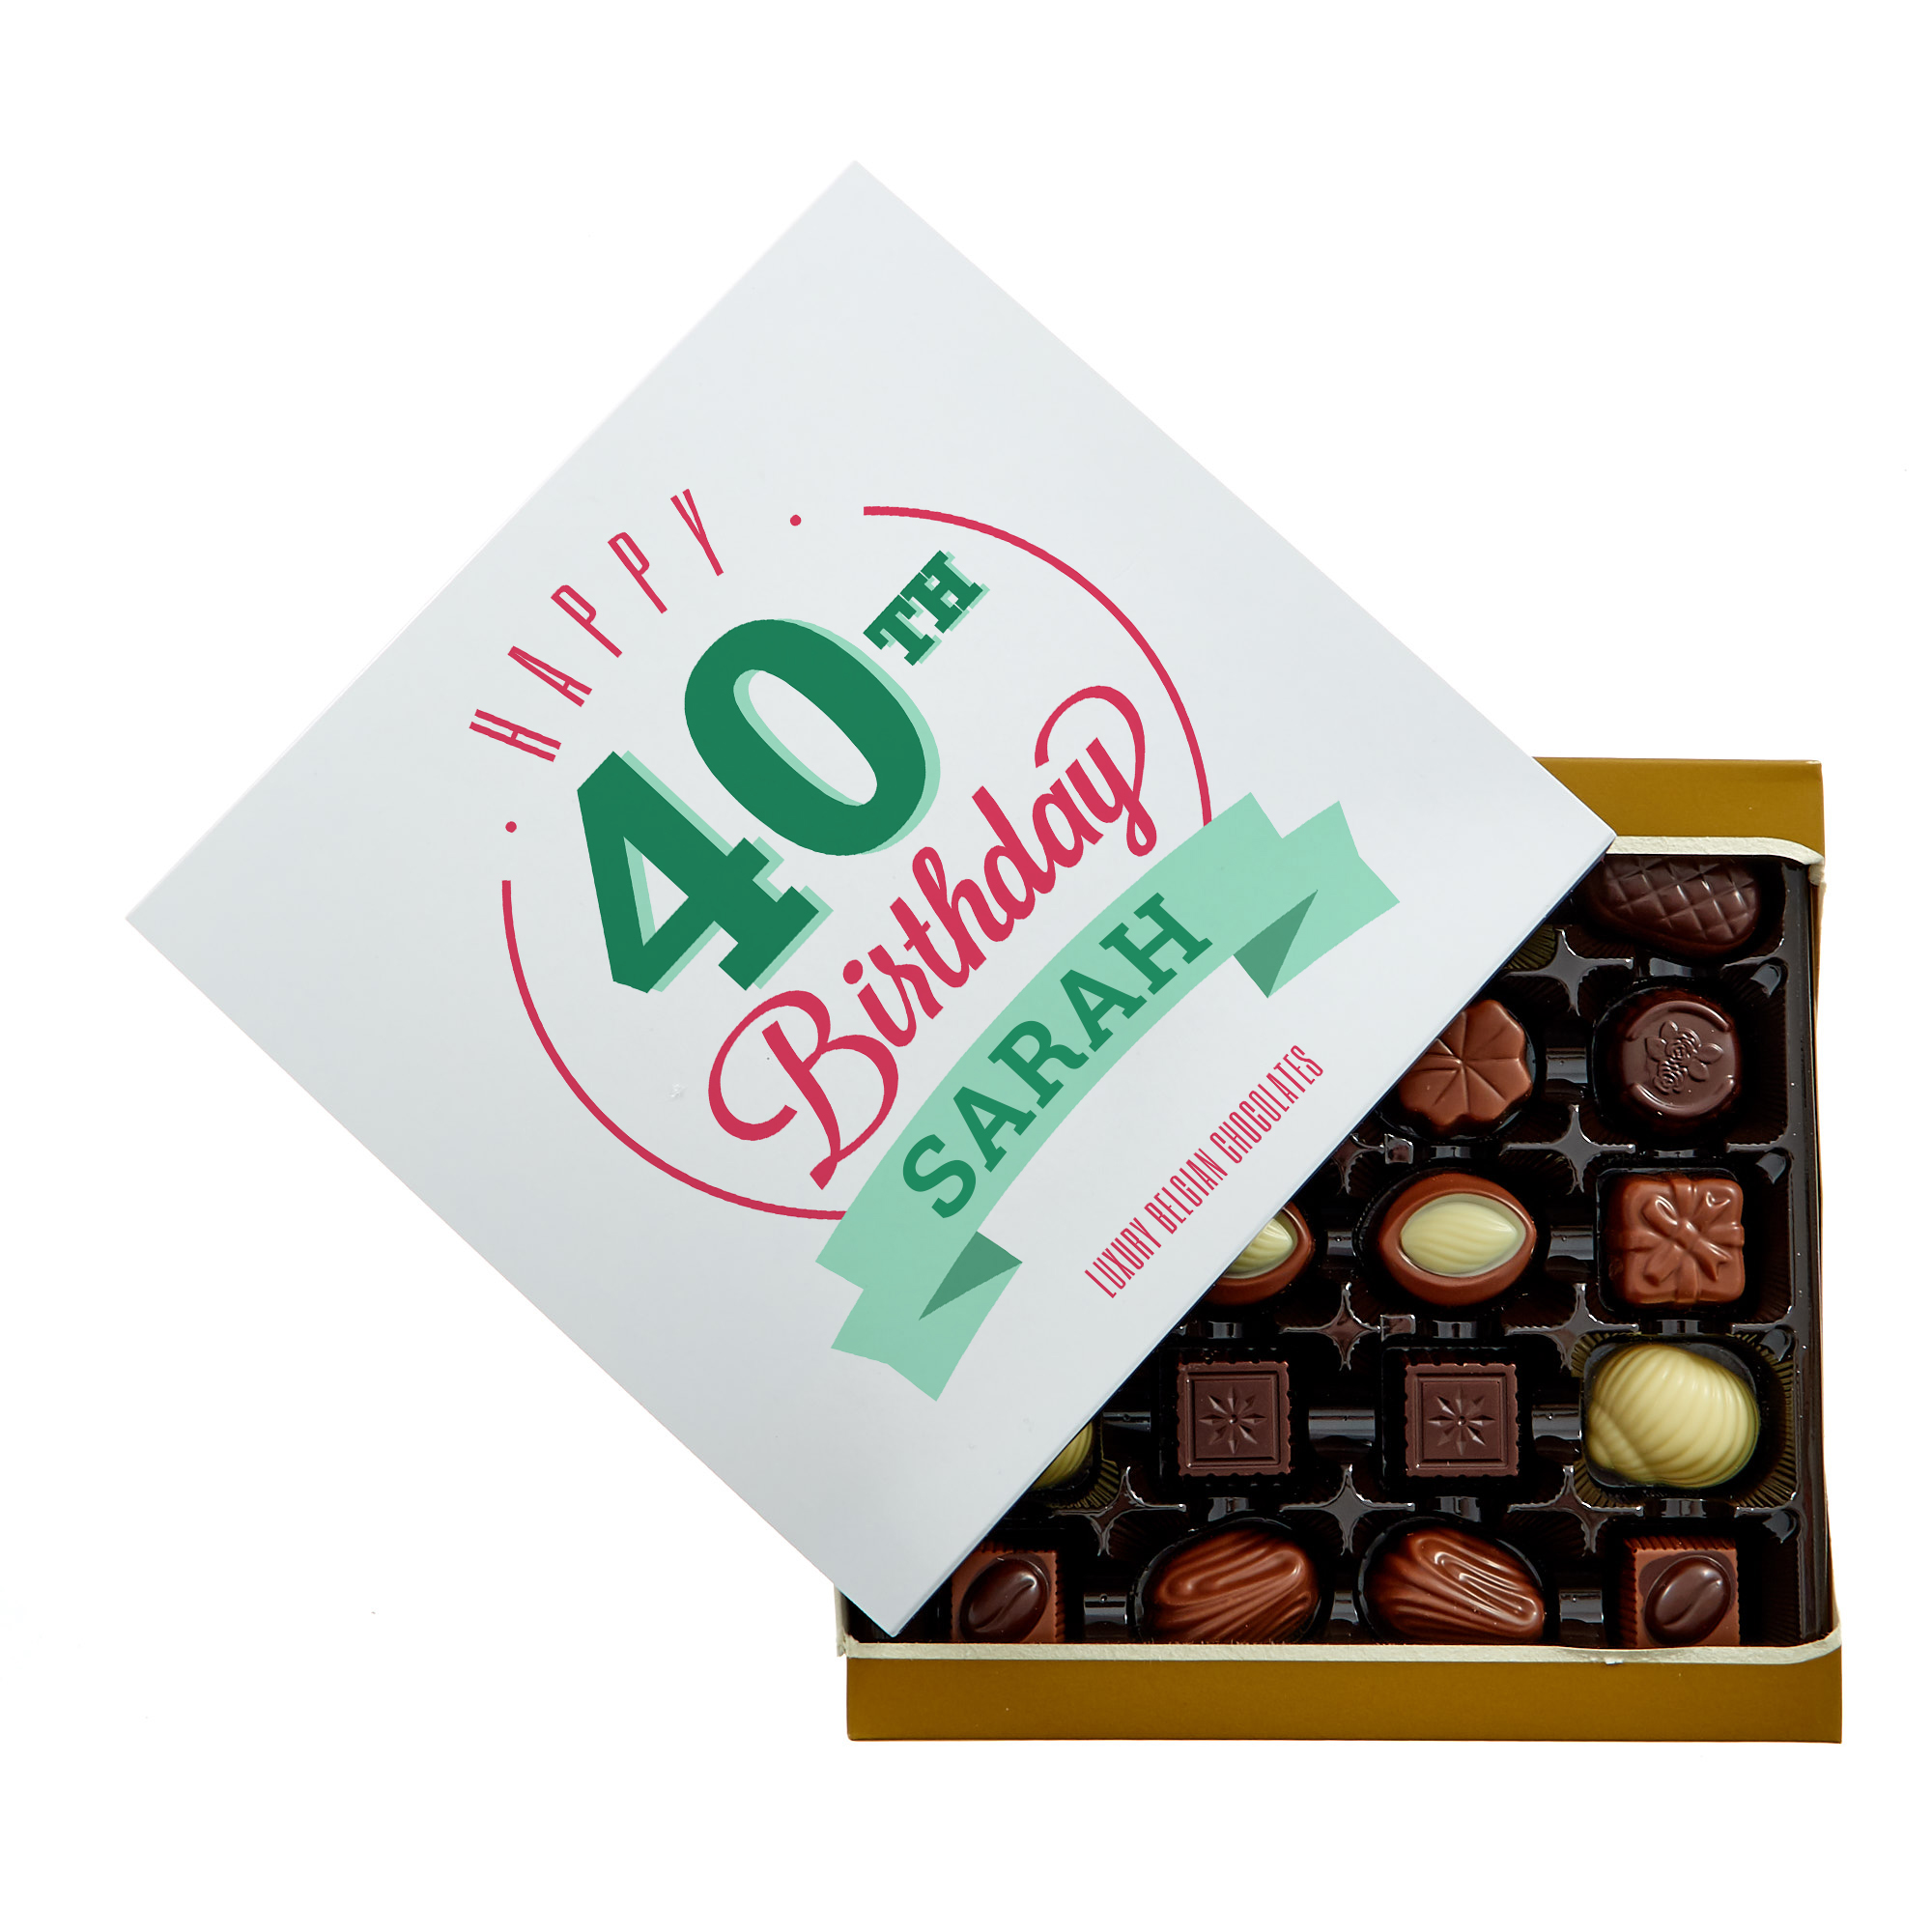 Personalised Belgian Chocolates - Happy 40th Birthday